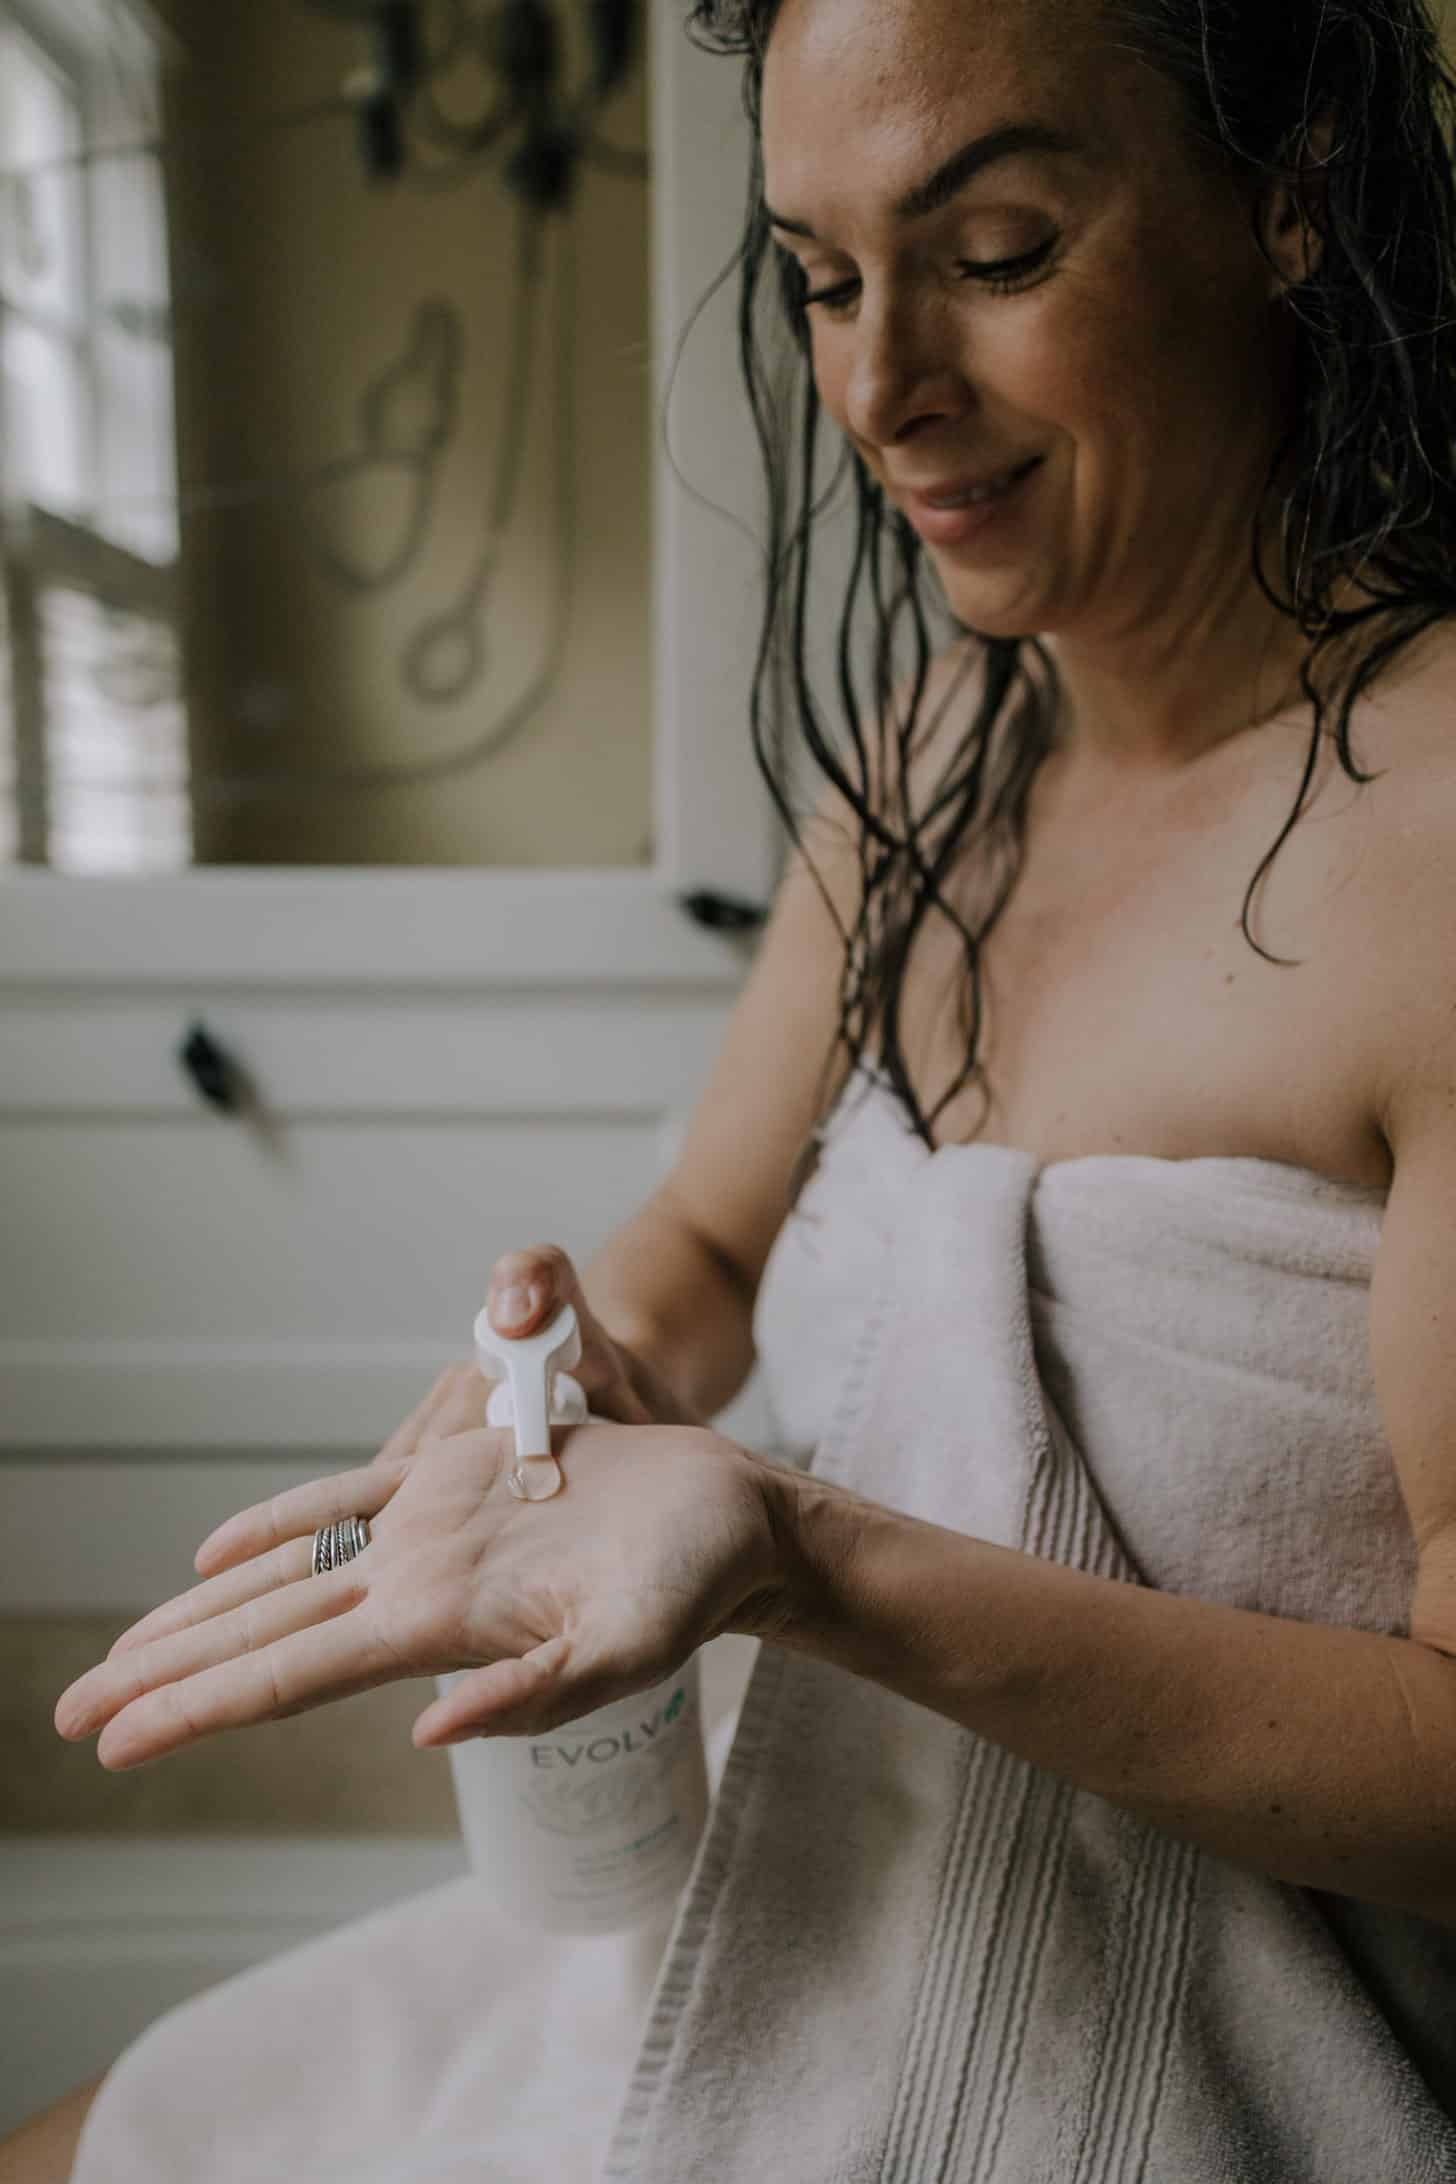 a woman pumps shampoo into her hand